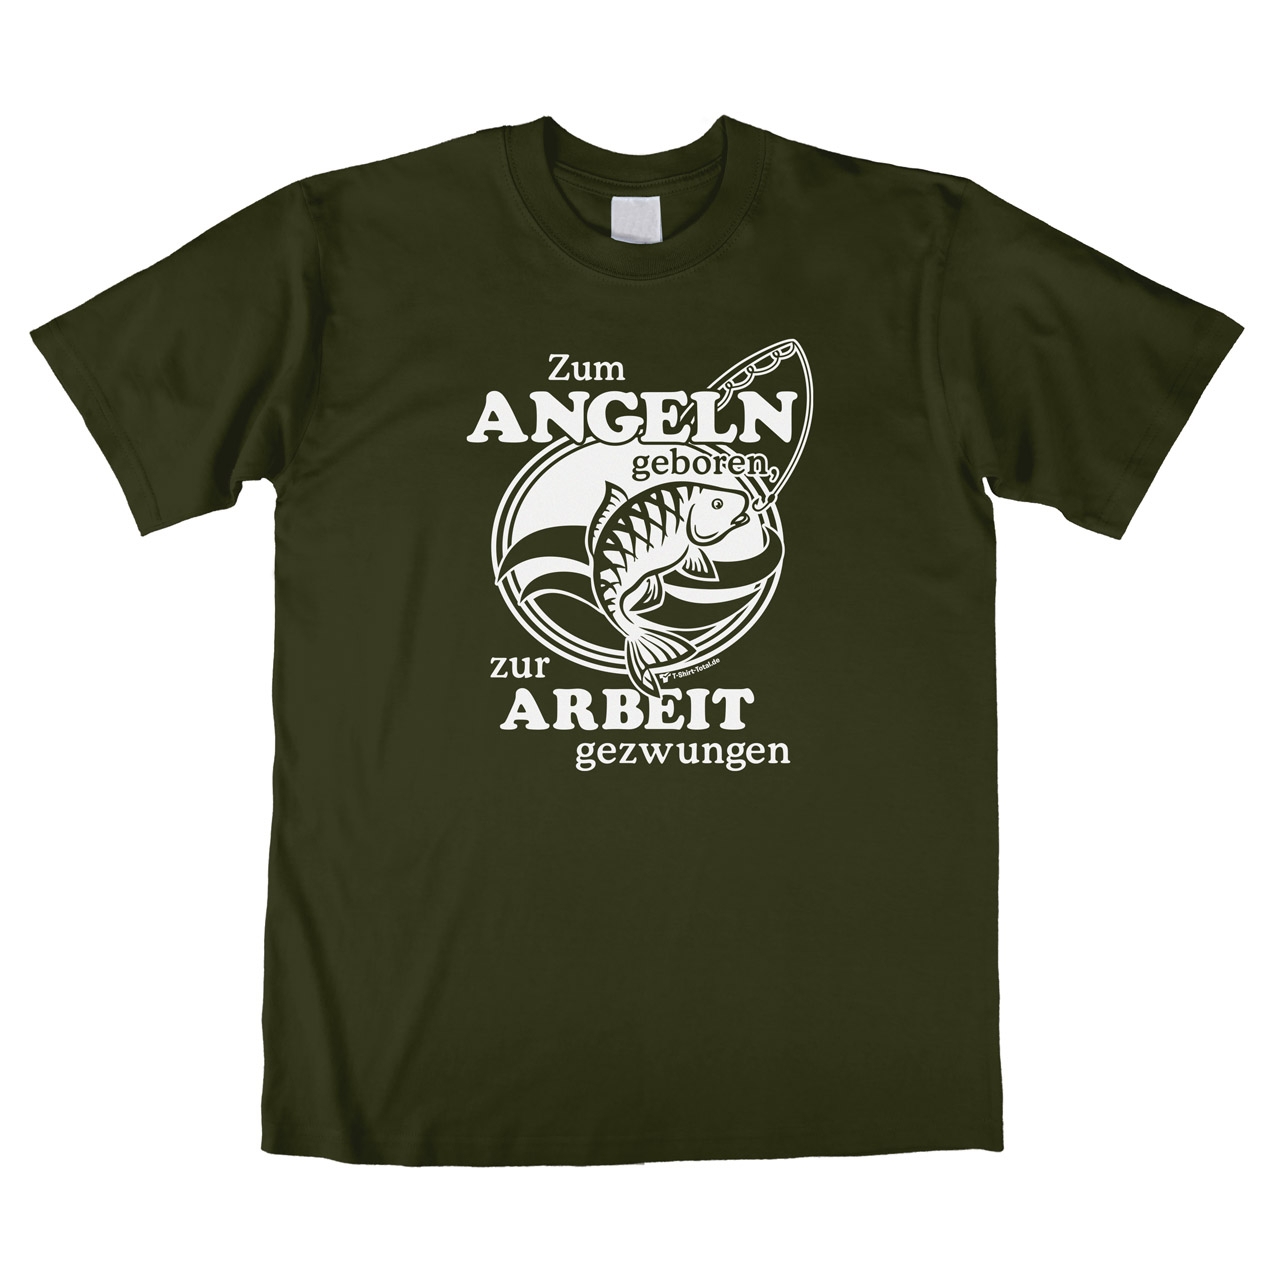 Zum Angeln geboren Unisex T-Shirt khaki 3-Extra Large